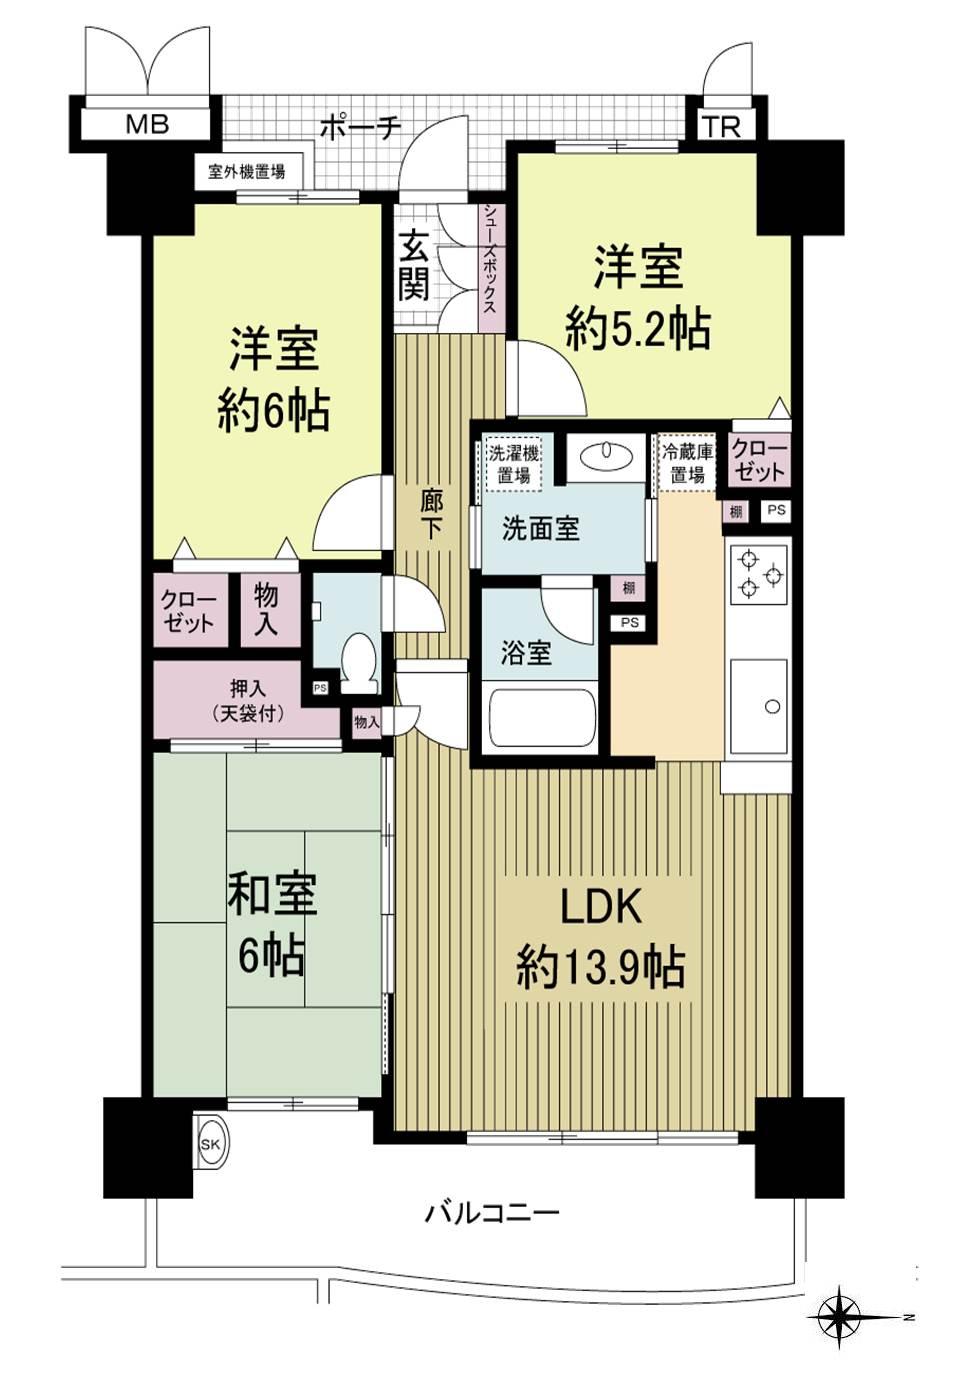 Floor plan. 3LDK, Price 19 million yen, Occupied area 67.95 sq m , Balcony area 11.98 sq m